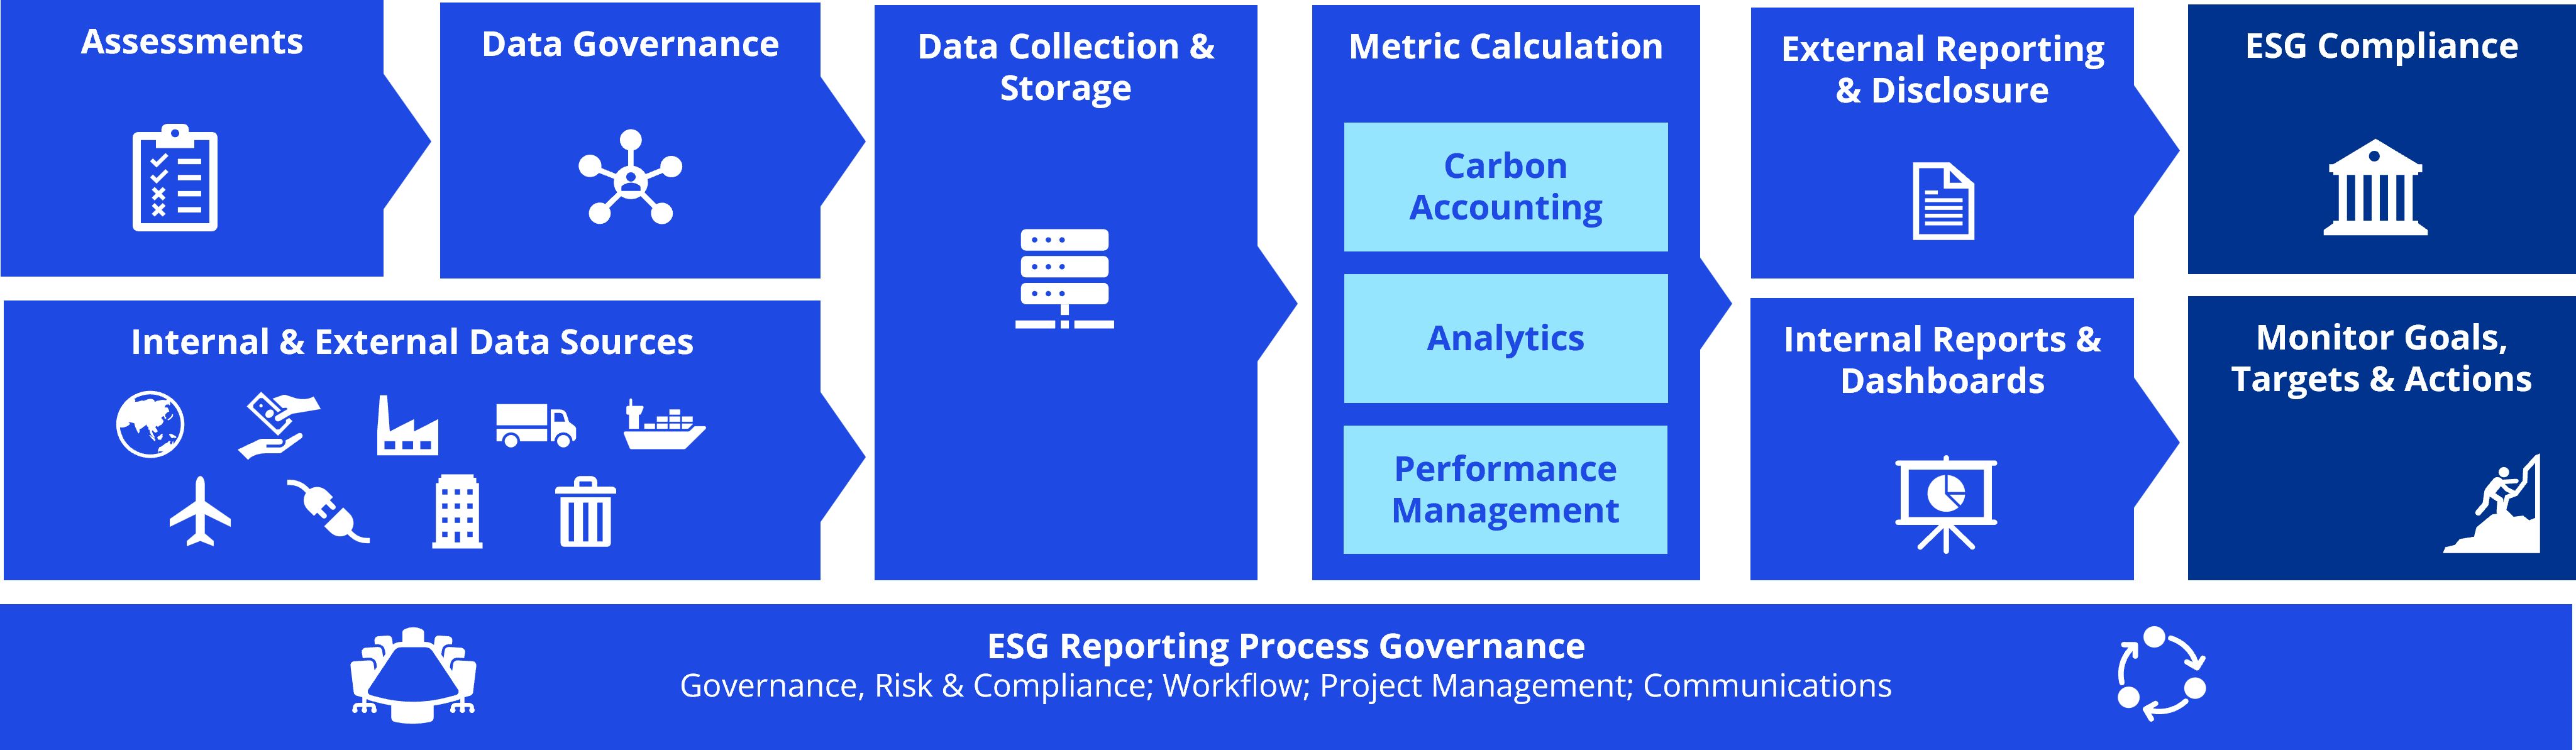 ESG Technology capabilities framework KPMG